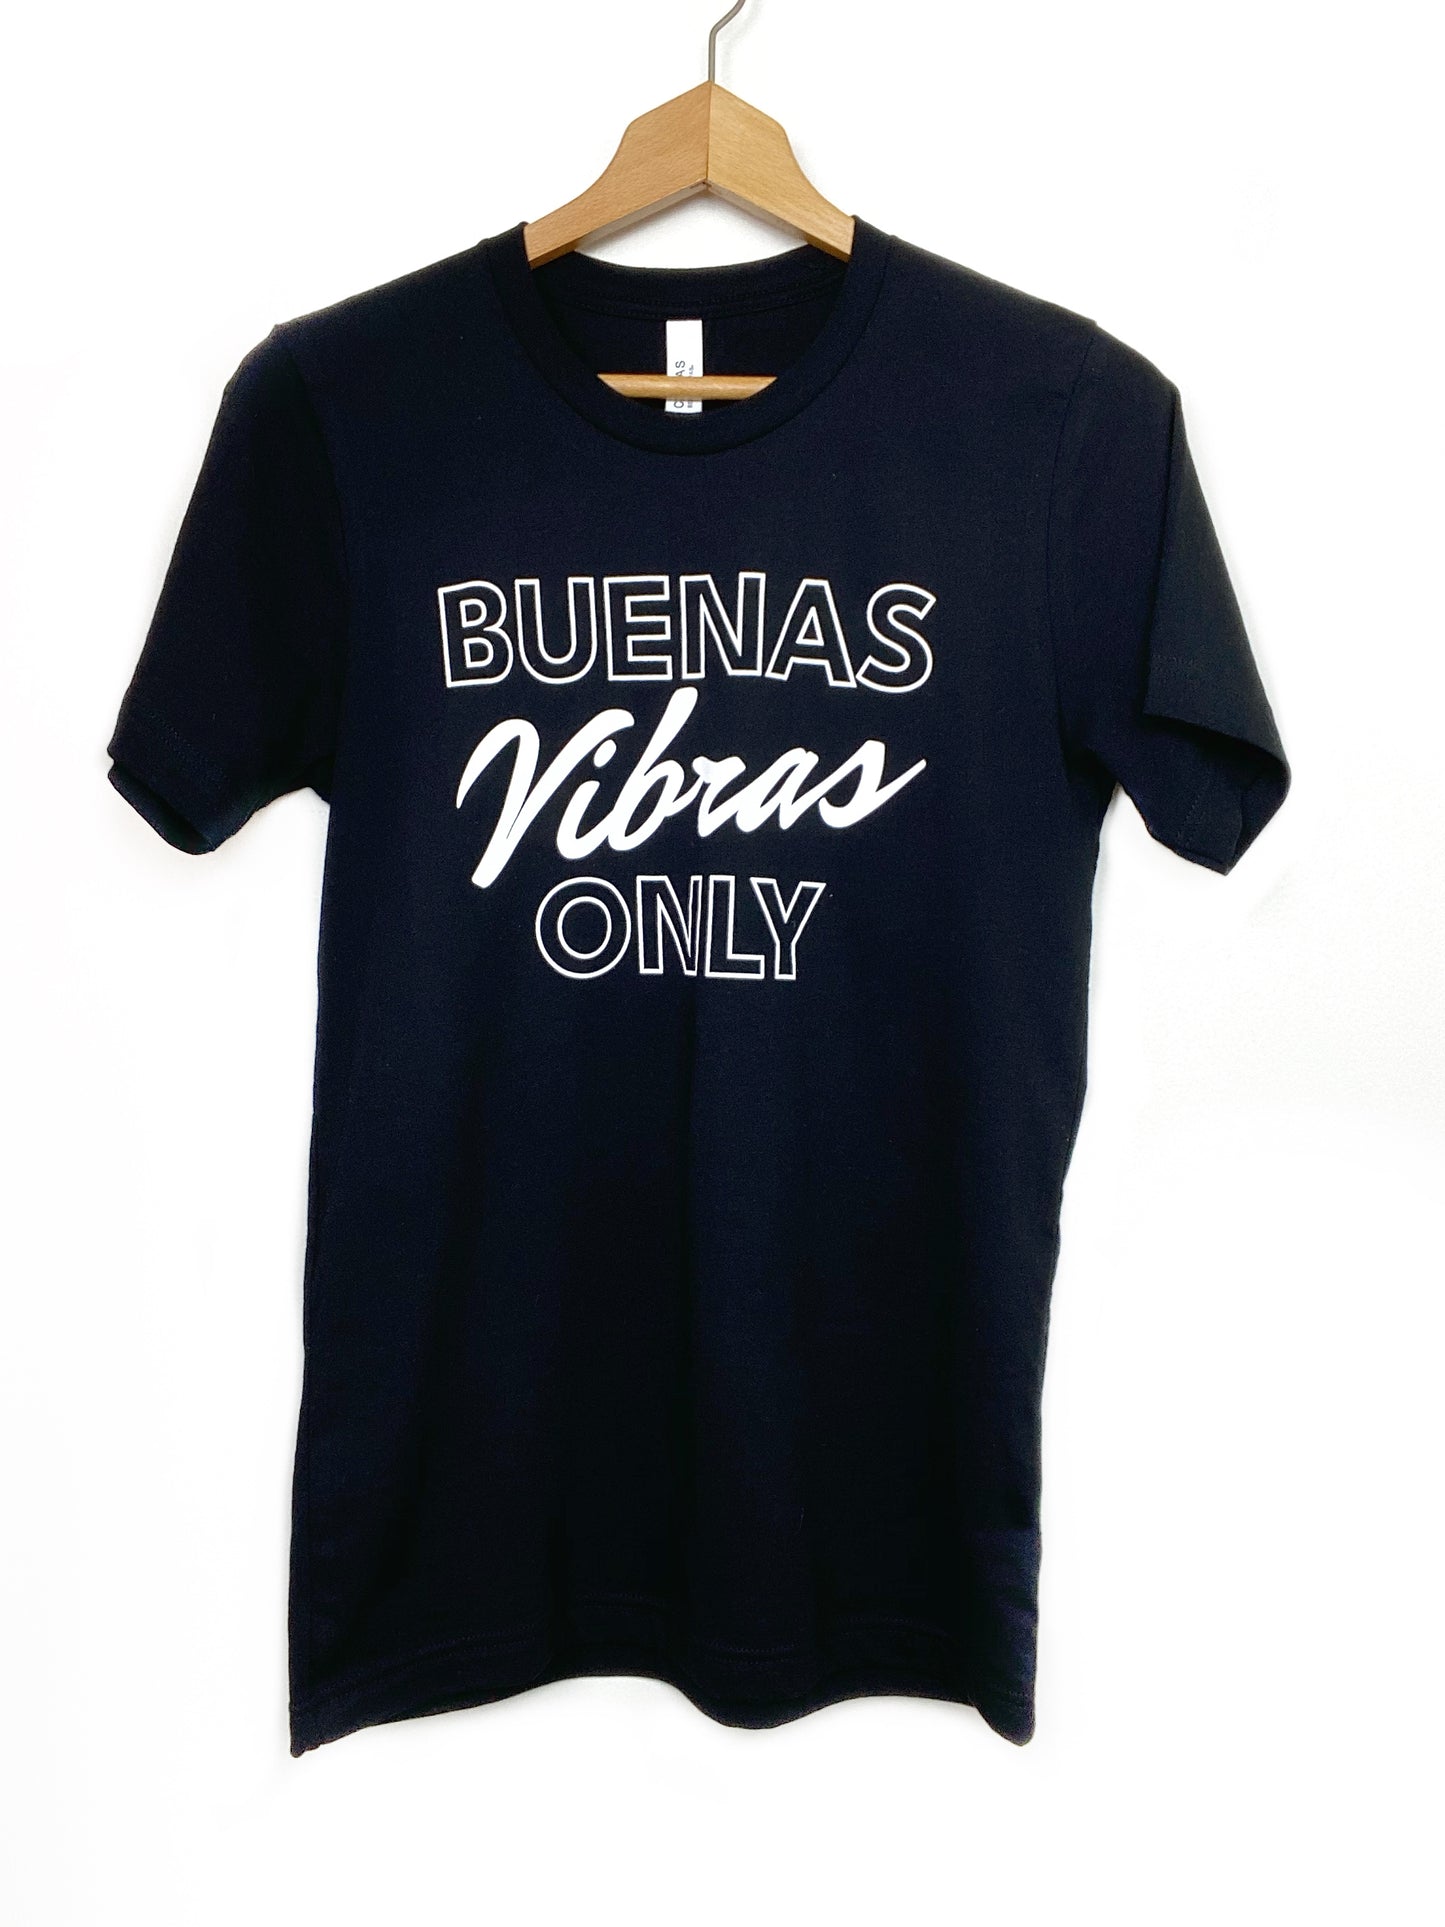 Buenas Vibras Only T-Shirt (Black)